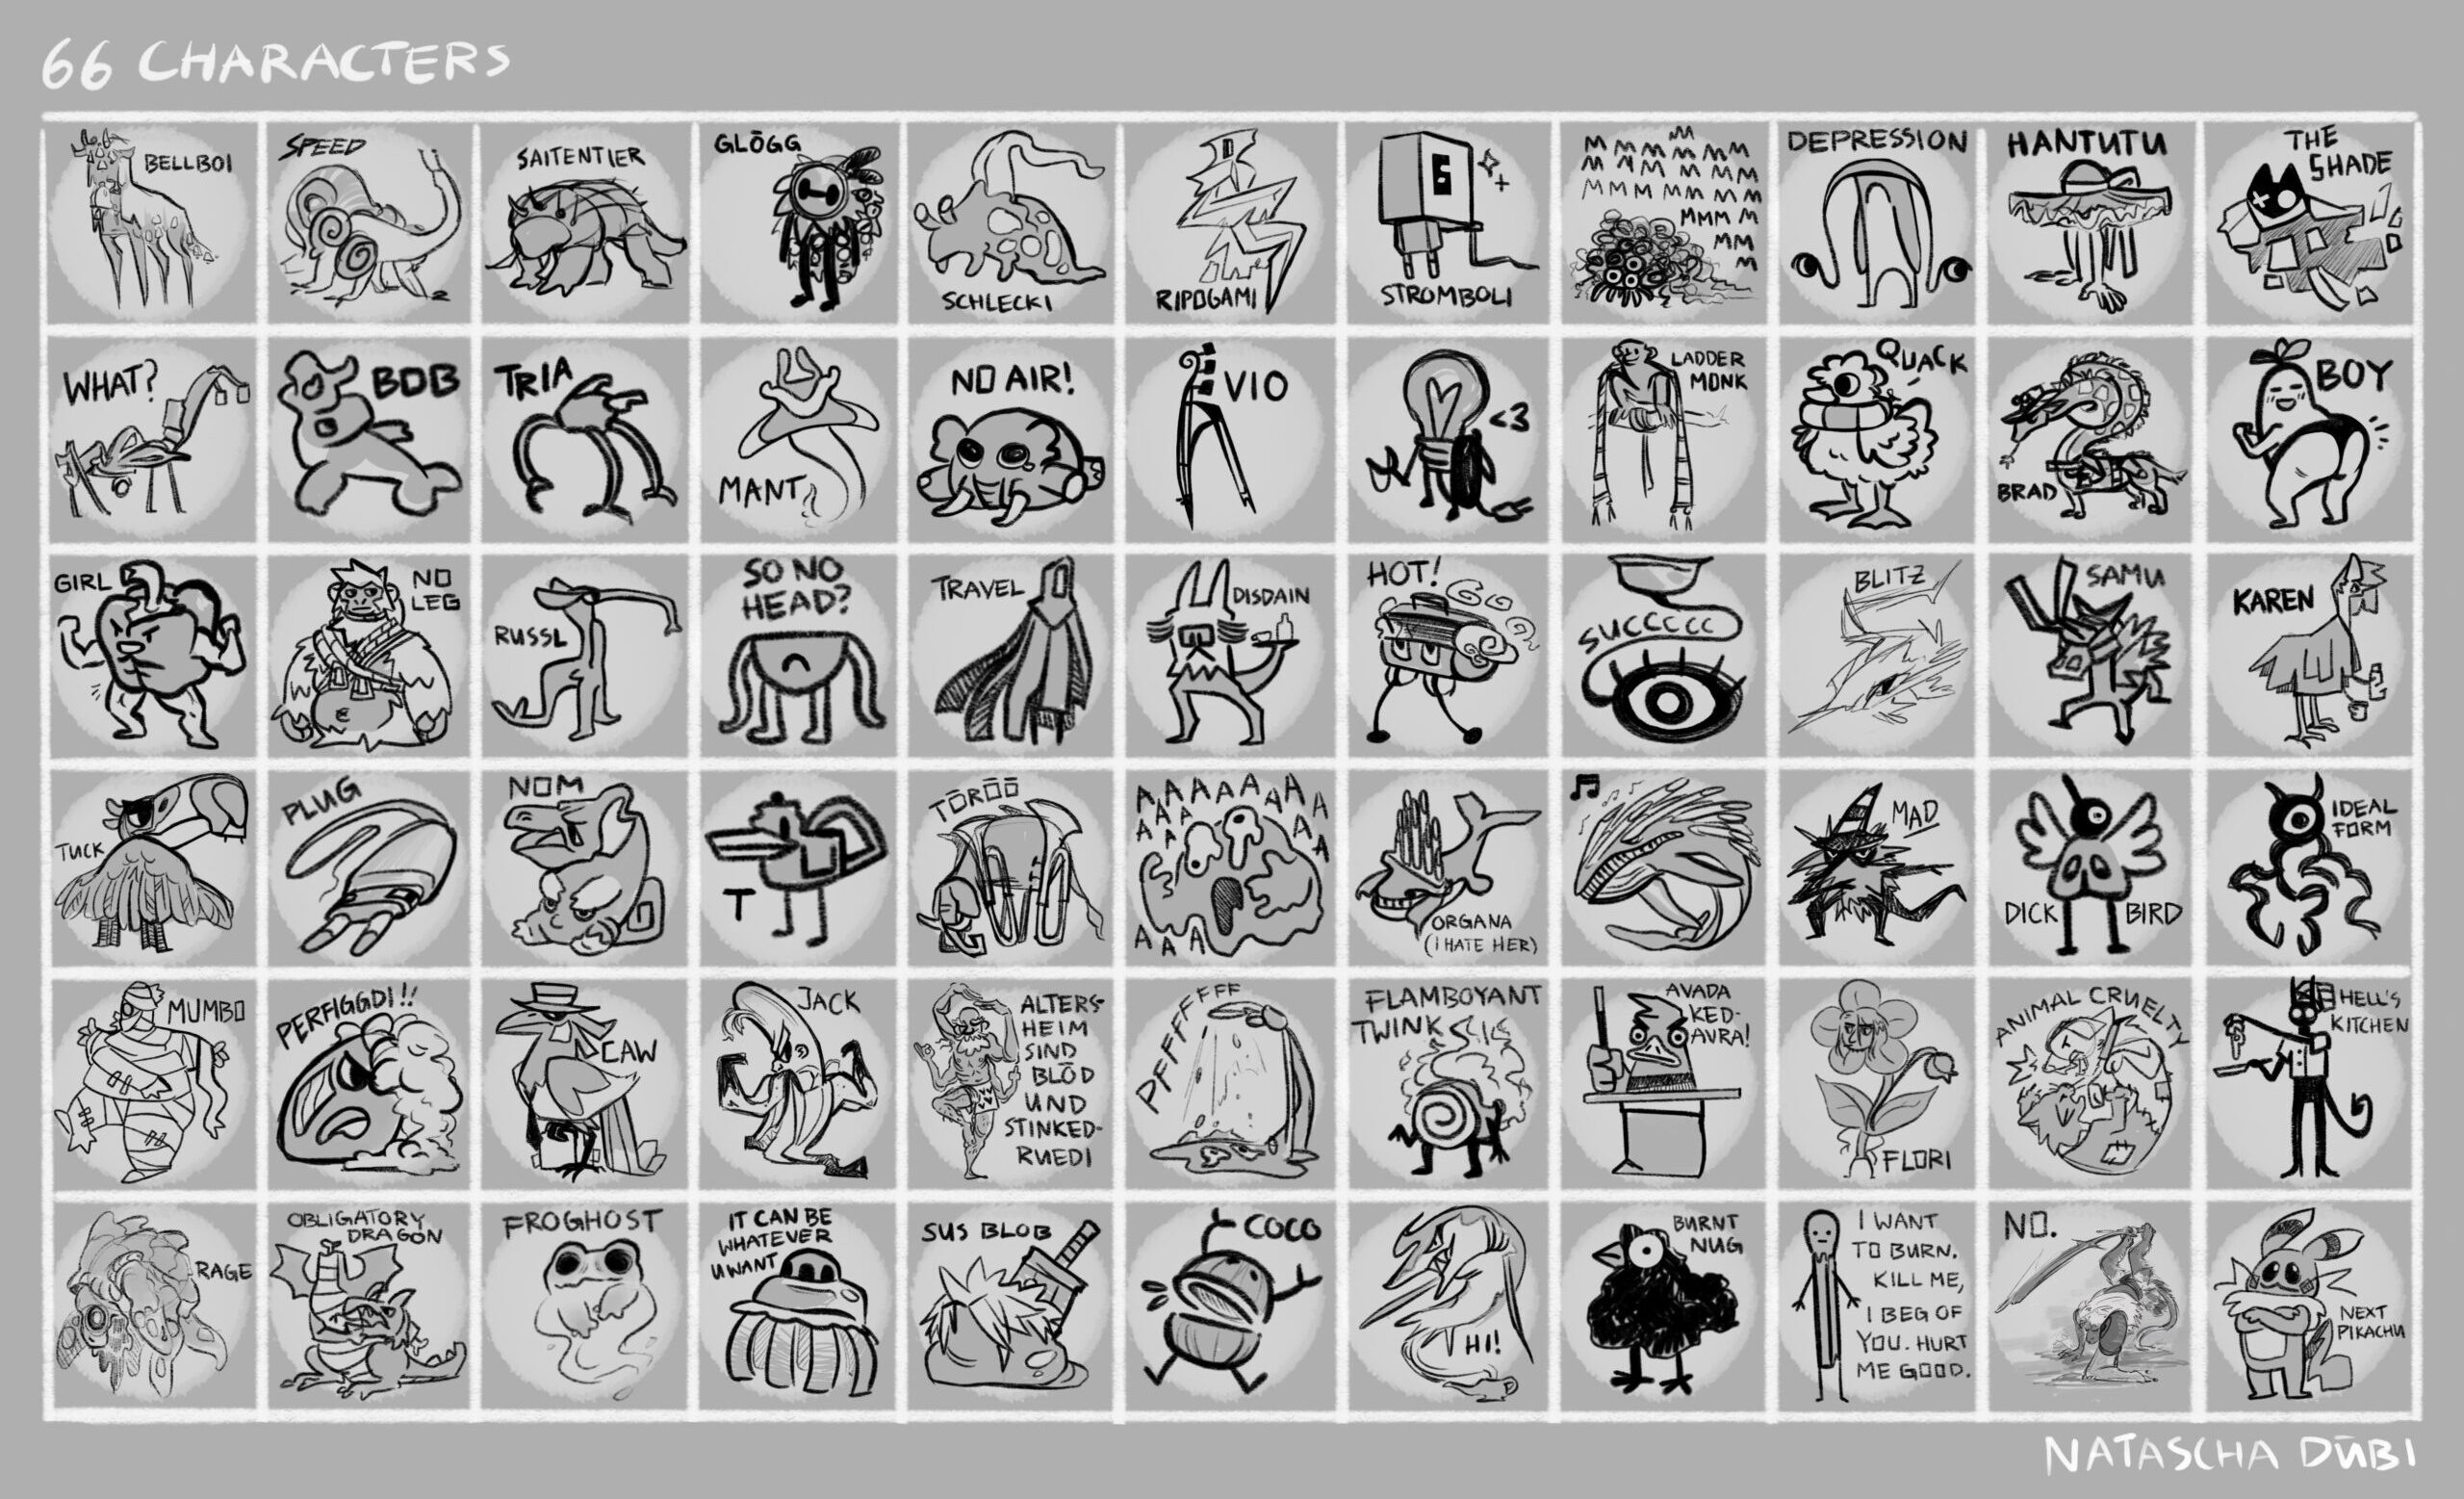 Small Thumbnail Illustrations of 66 characters